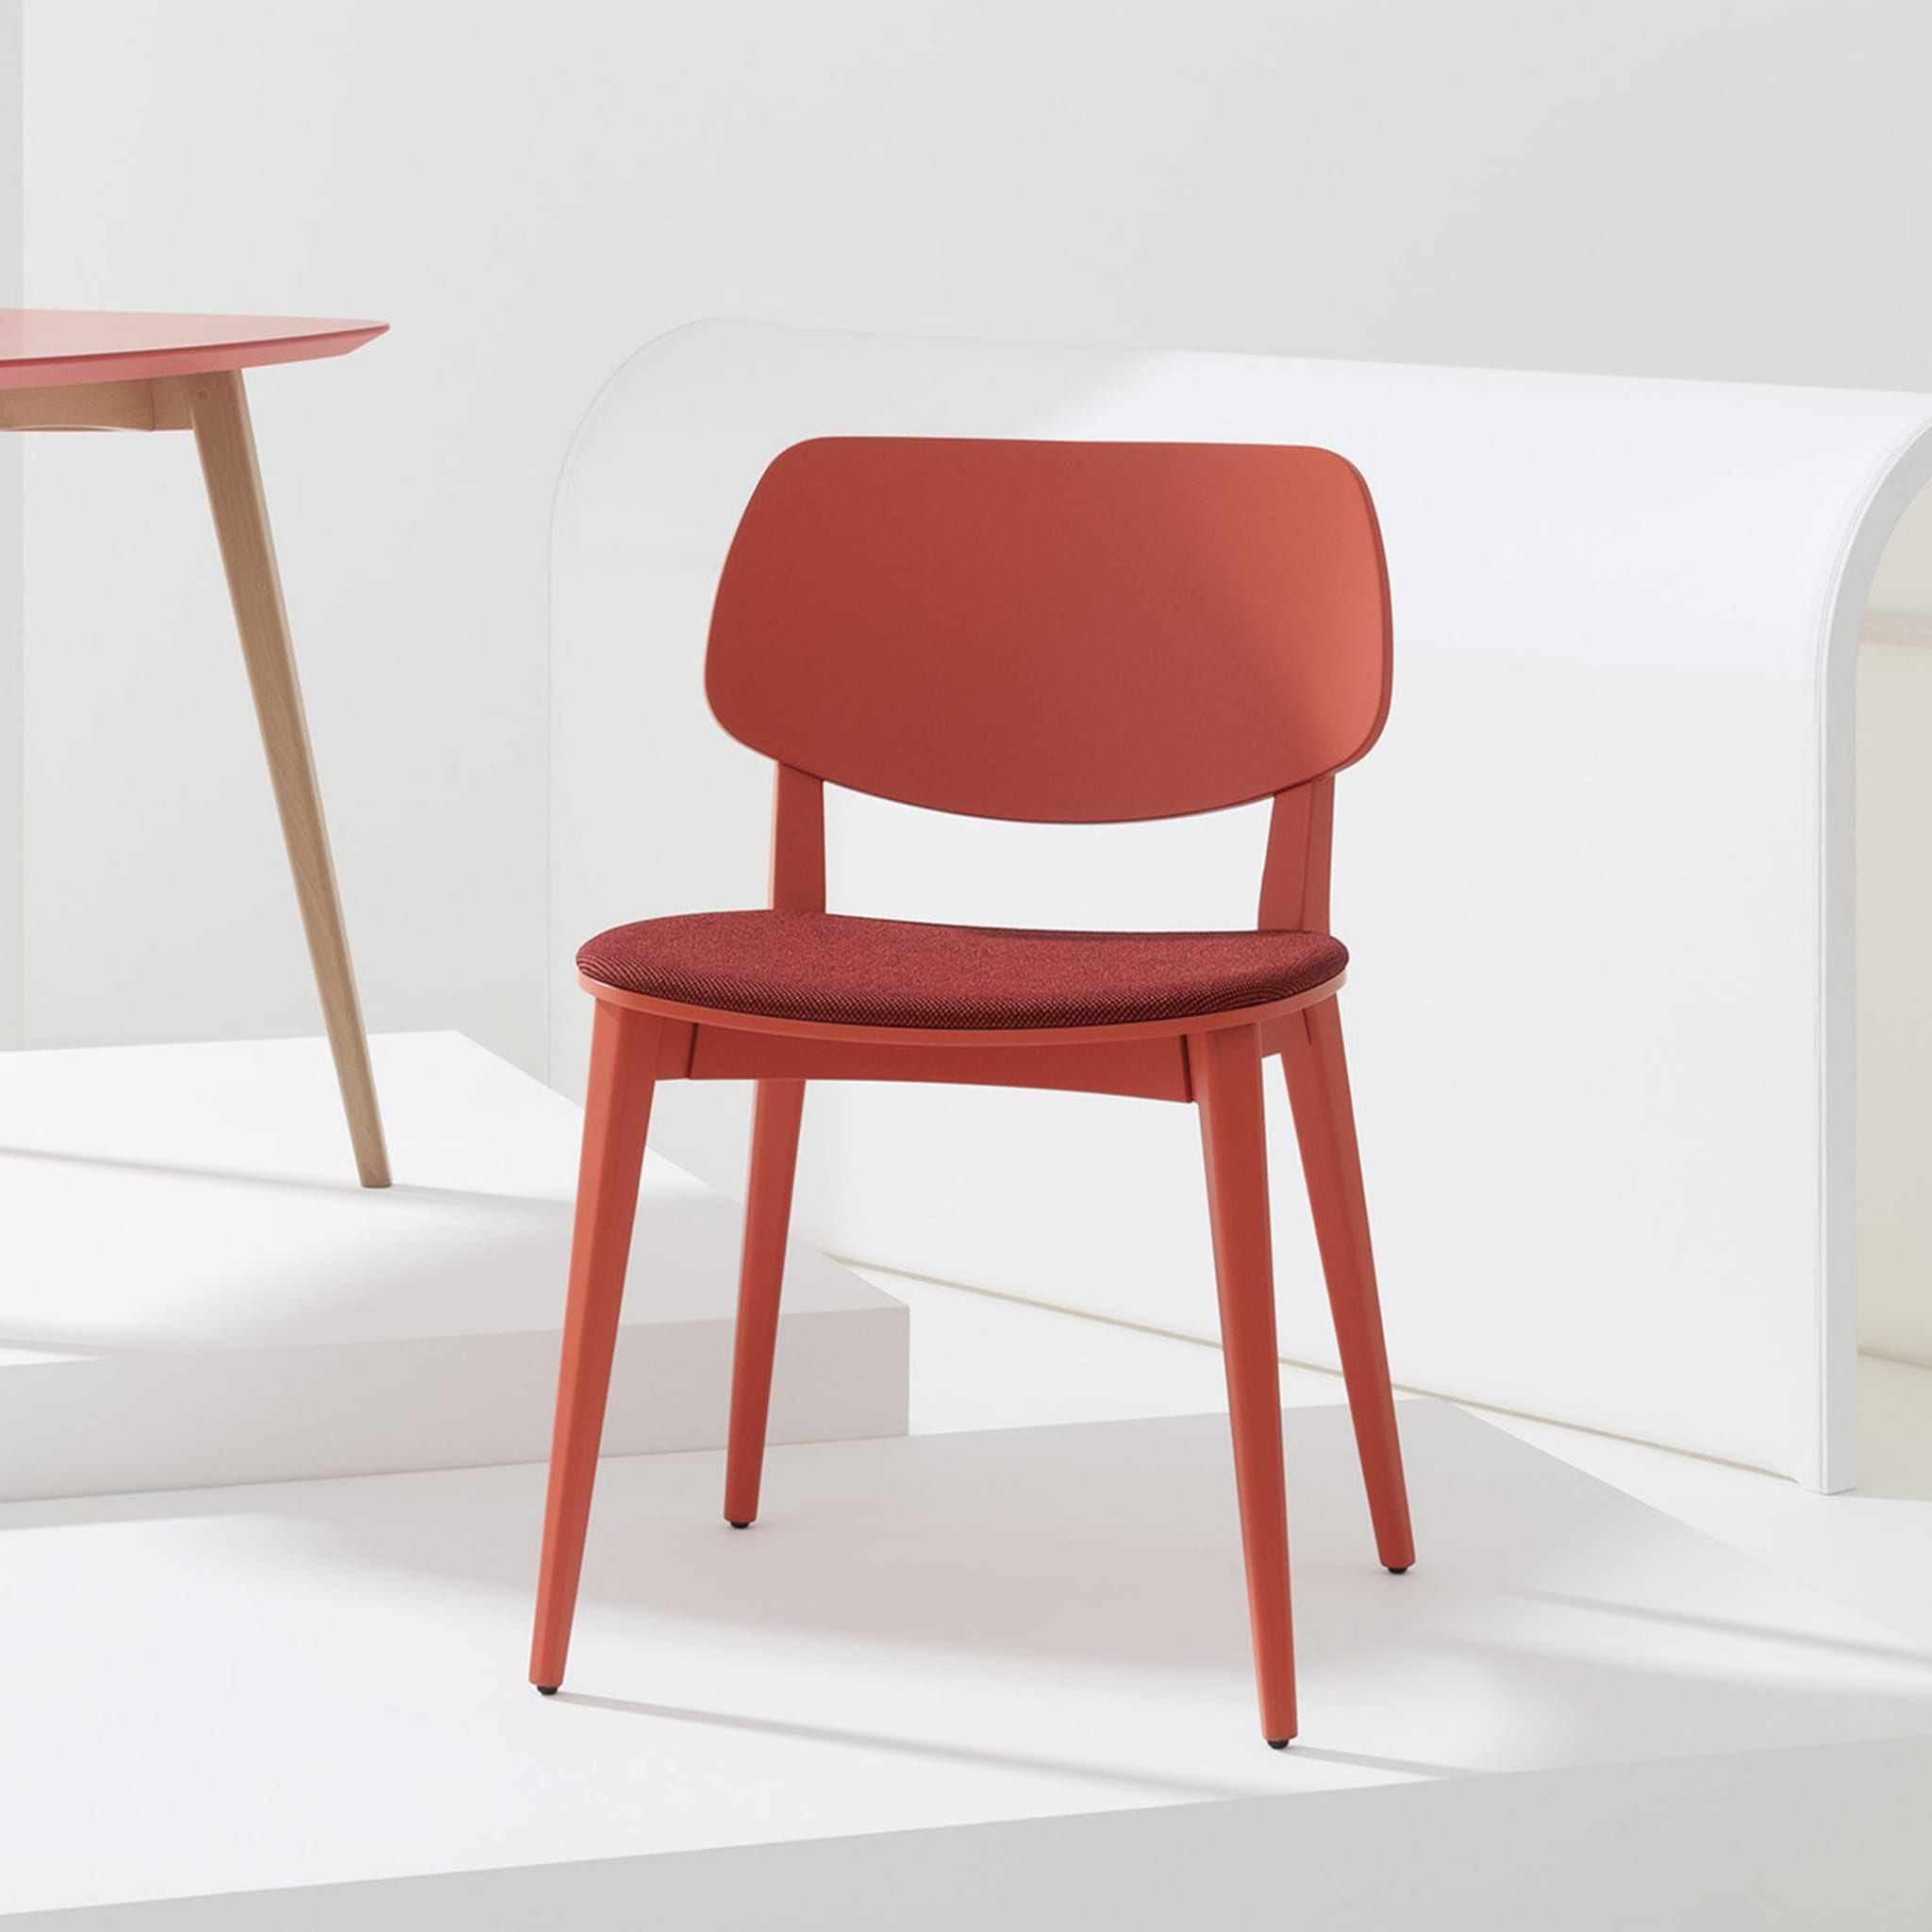 Doll 551 Red Chair by Emilio Nanni - Alternative view 1